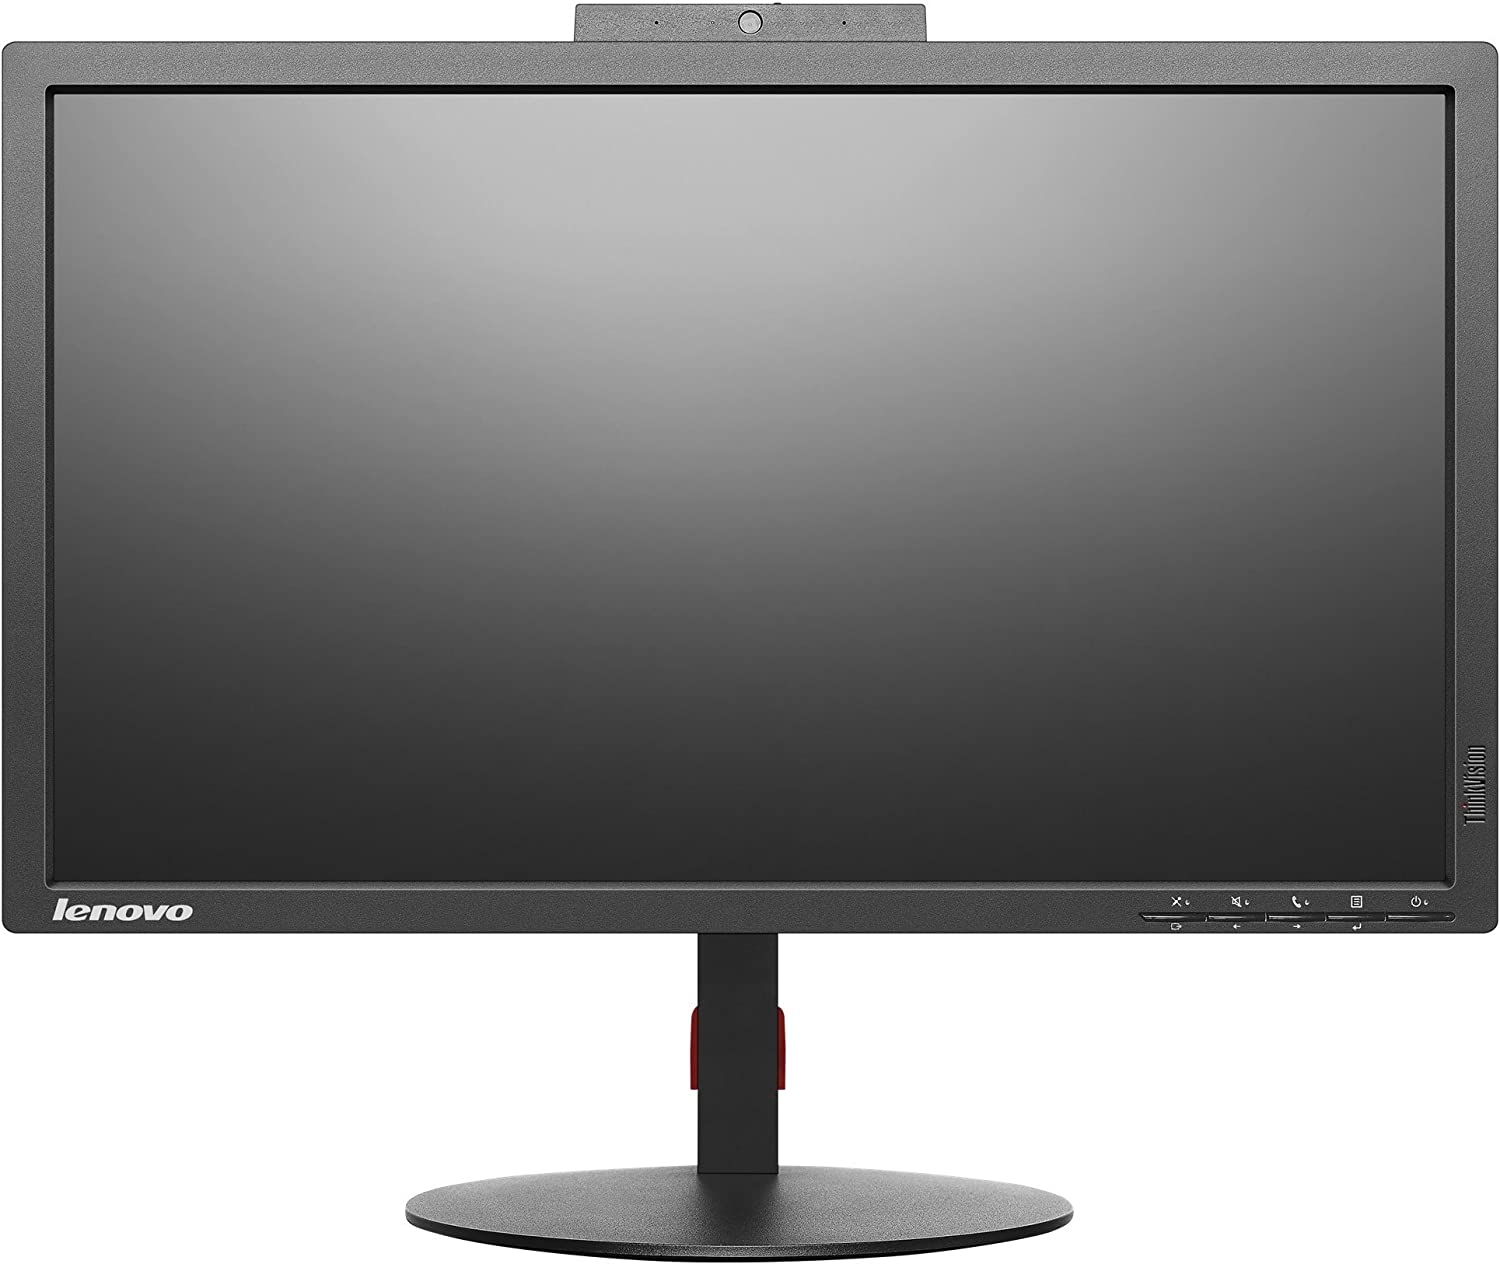 Lenovo ThinkVision T2224z 21.5 inches LED LCD Monitor - 16:9 7ms HDMI VGA DisplayPort USB WebCam (Renewed)